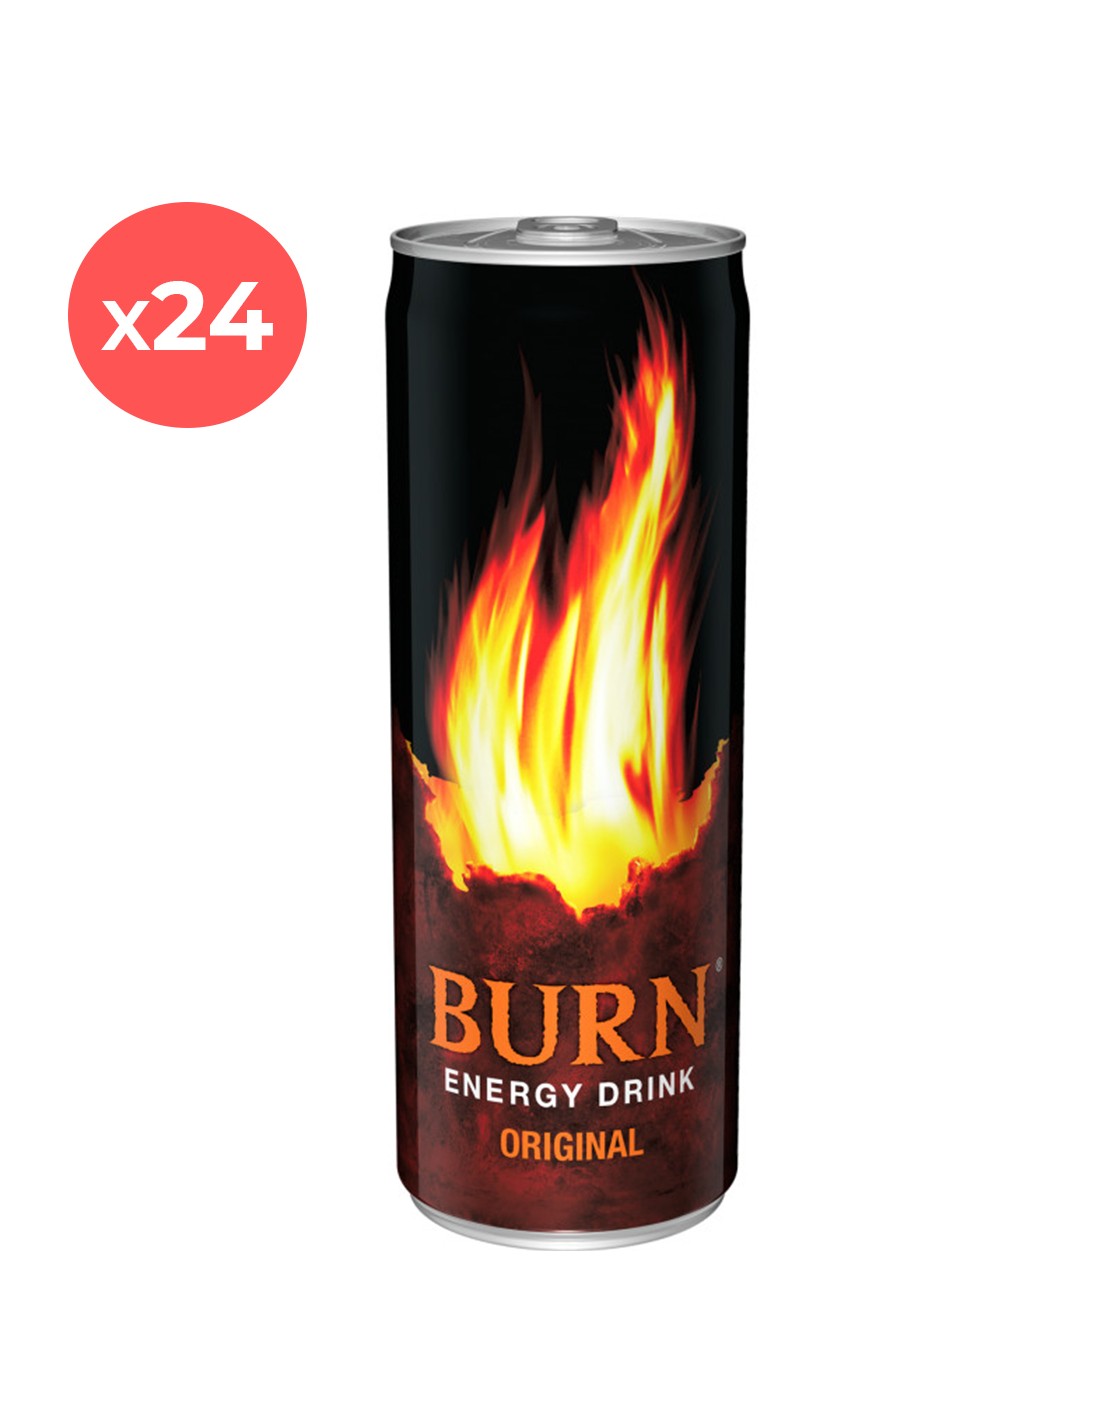 Bax 24 bucati Energizant Burn, 0.25L alcooldiscount.ro